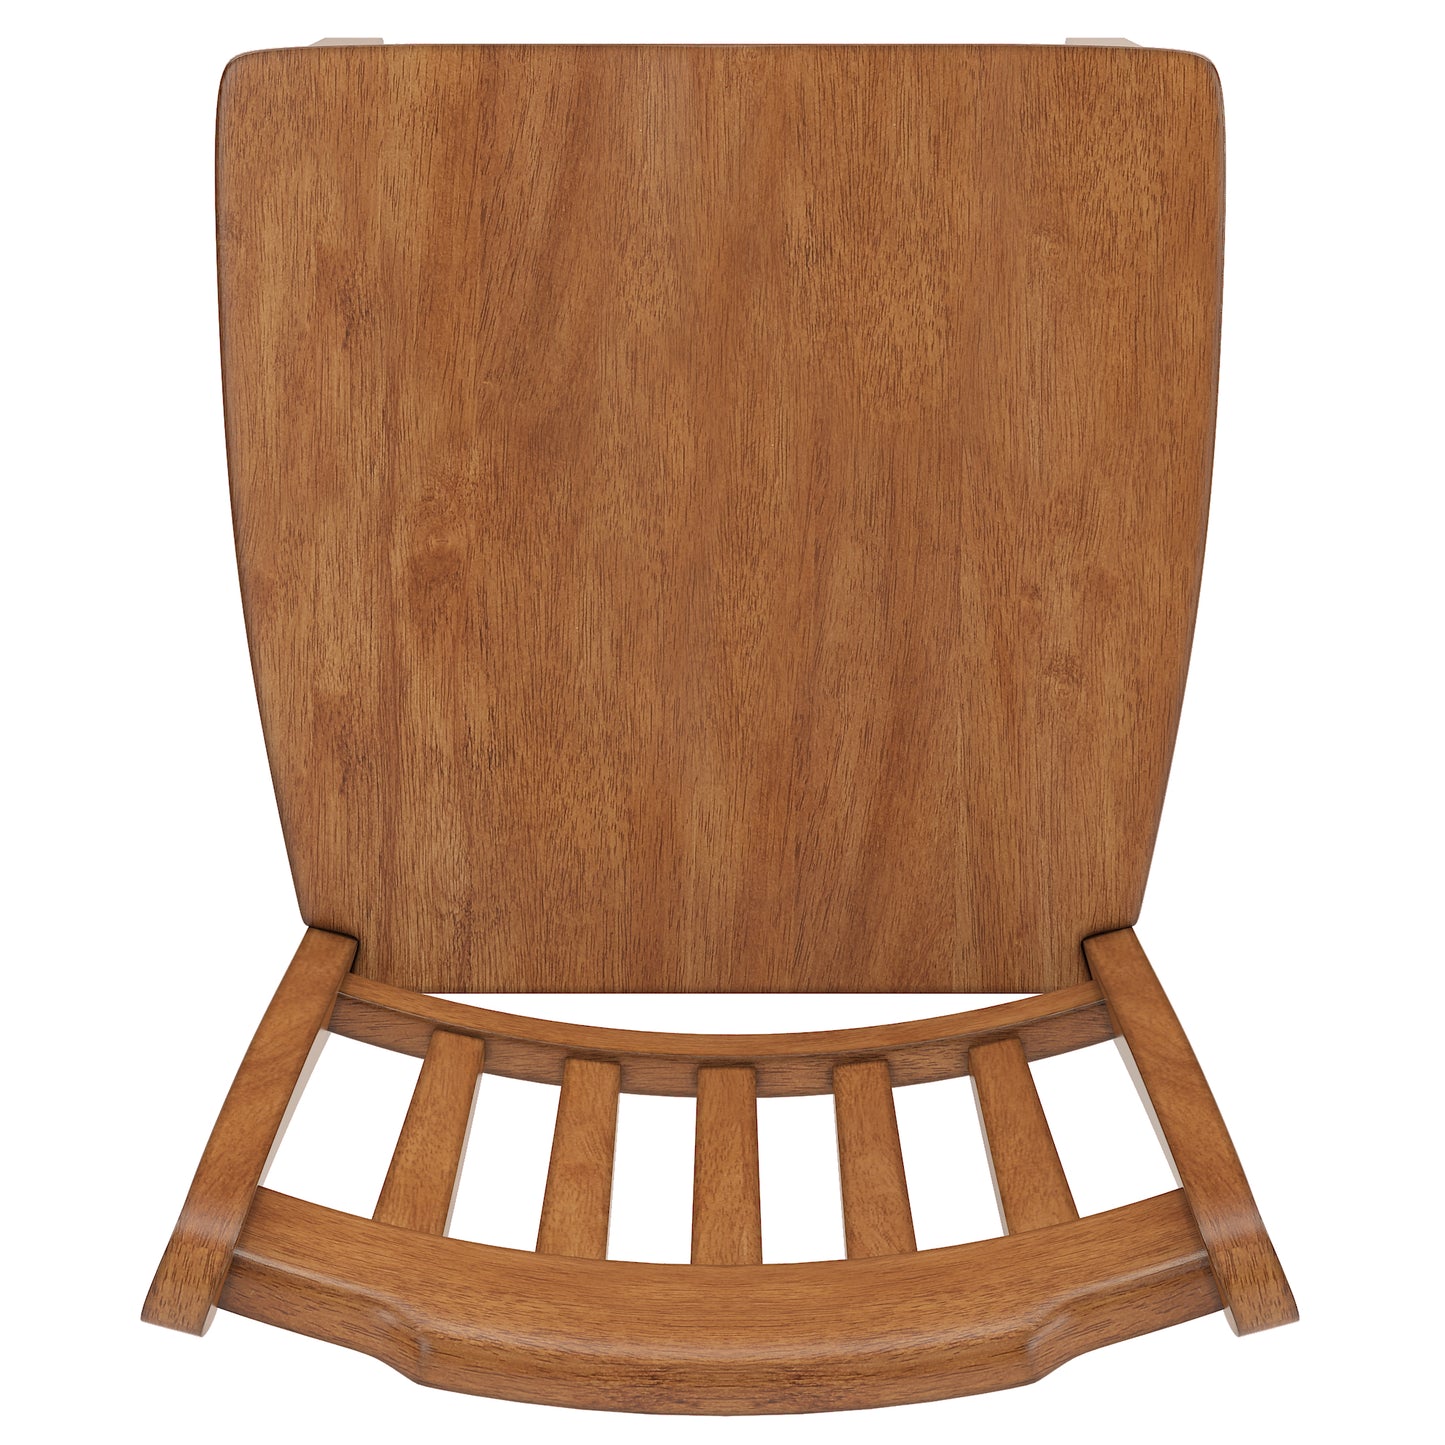 Slat Back Bar Height Chairs (Set of 2) - Oak Finish